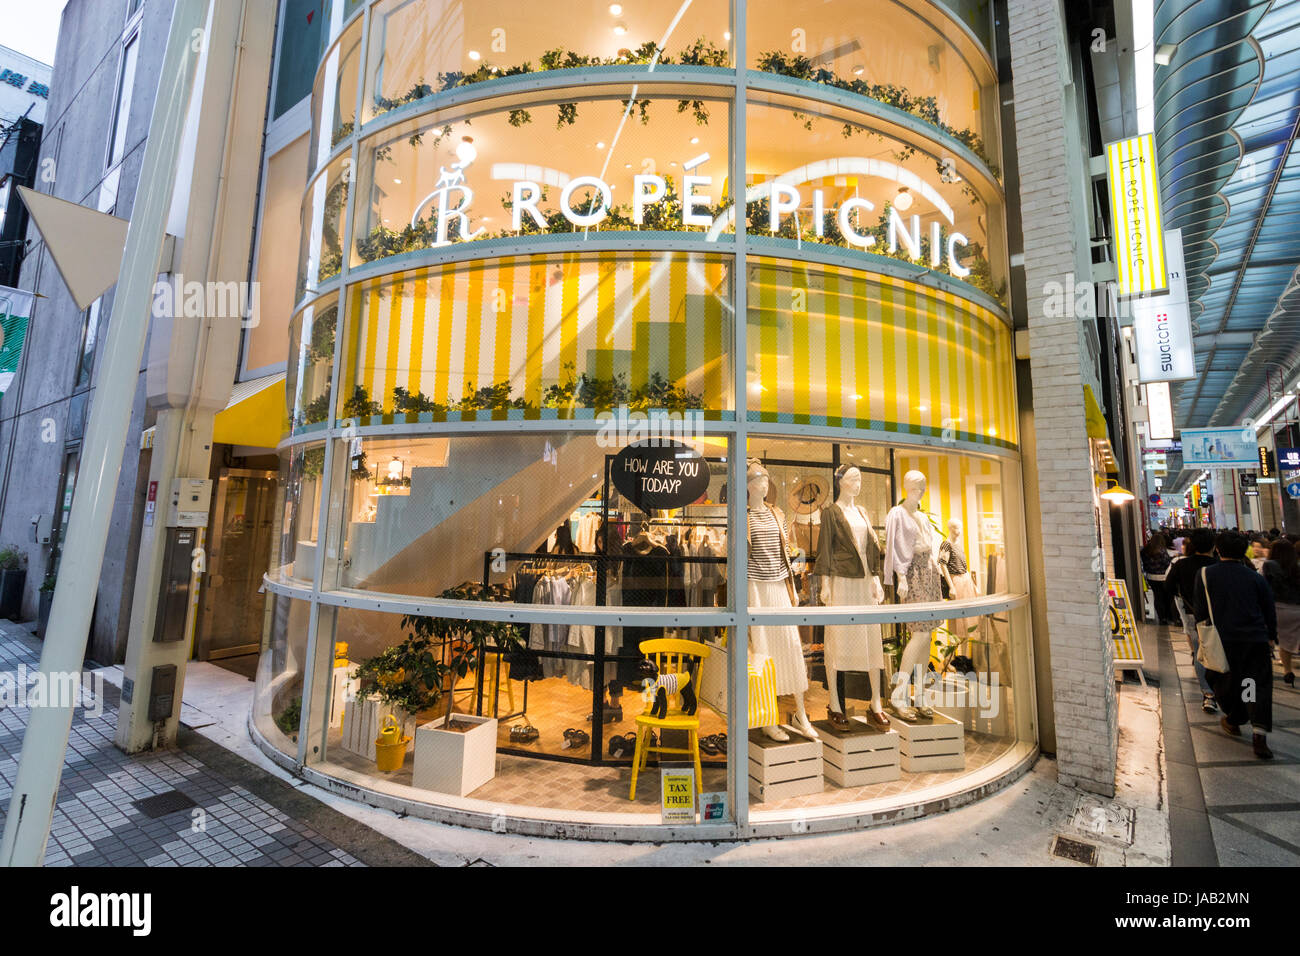 Japón, Osaka Shinsaibashi. Arquitectura muy módem aparece en la 'R Cuerda Picnic boutique de moda. Esquina de vidrio edificio almacén semicircular. Foto de stock